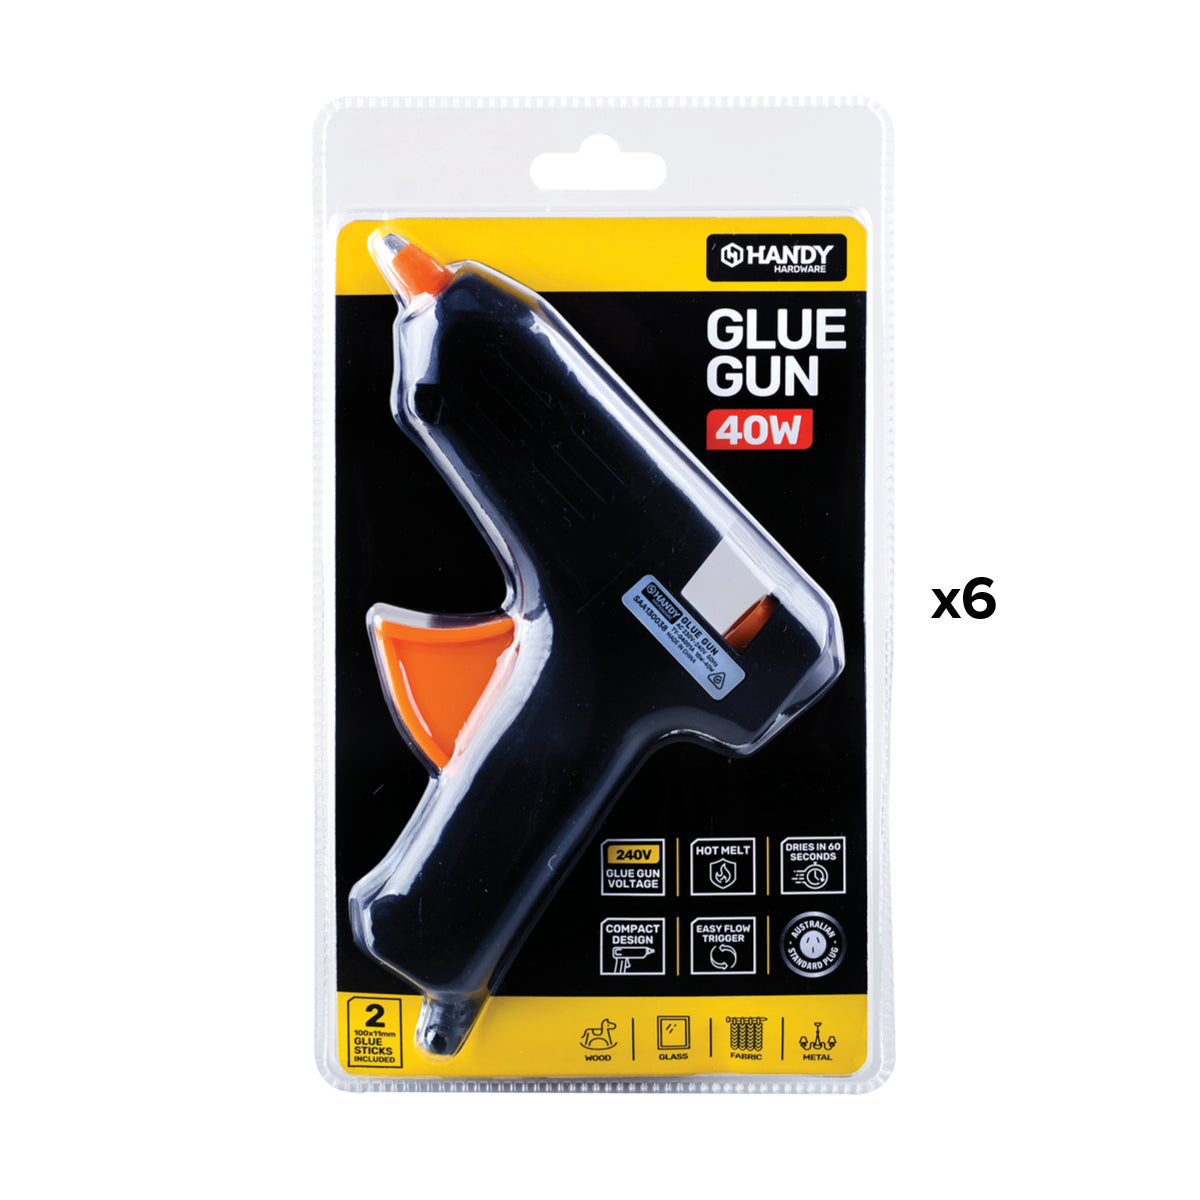 Handy Hardware 40W Glue Gun Glue Sticks Included 240V Compact Design